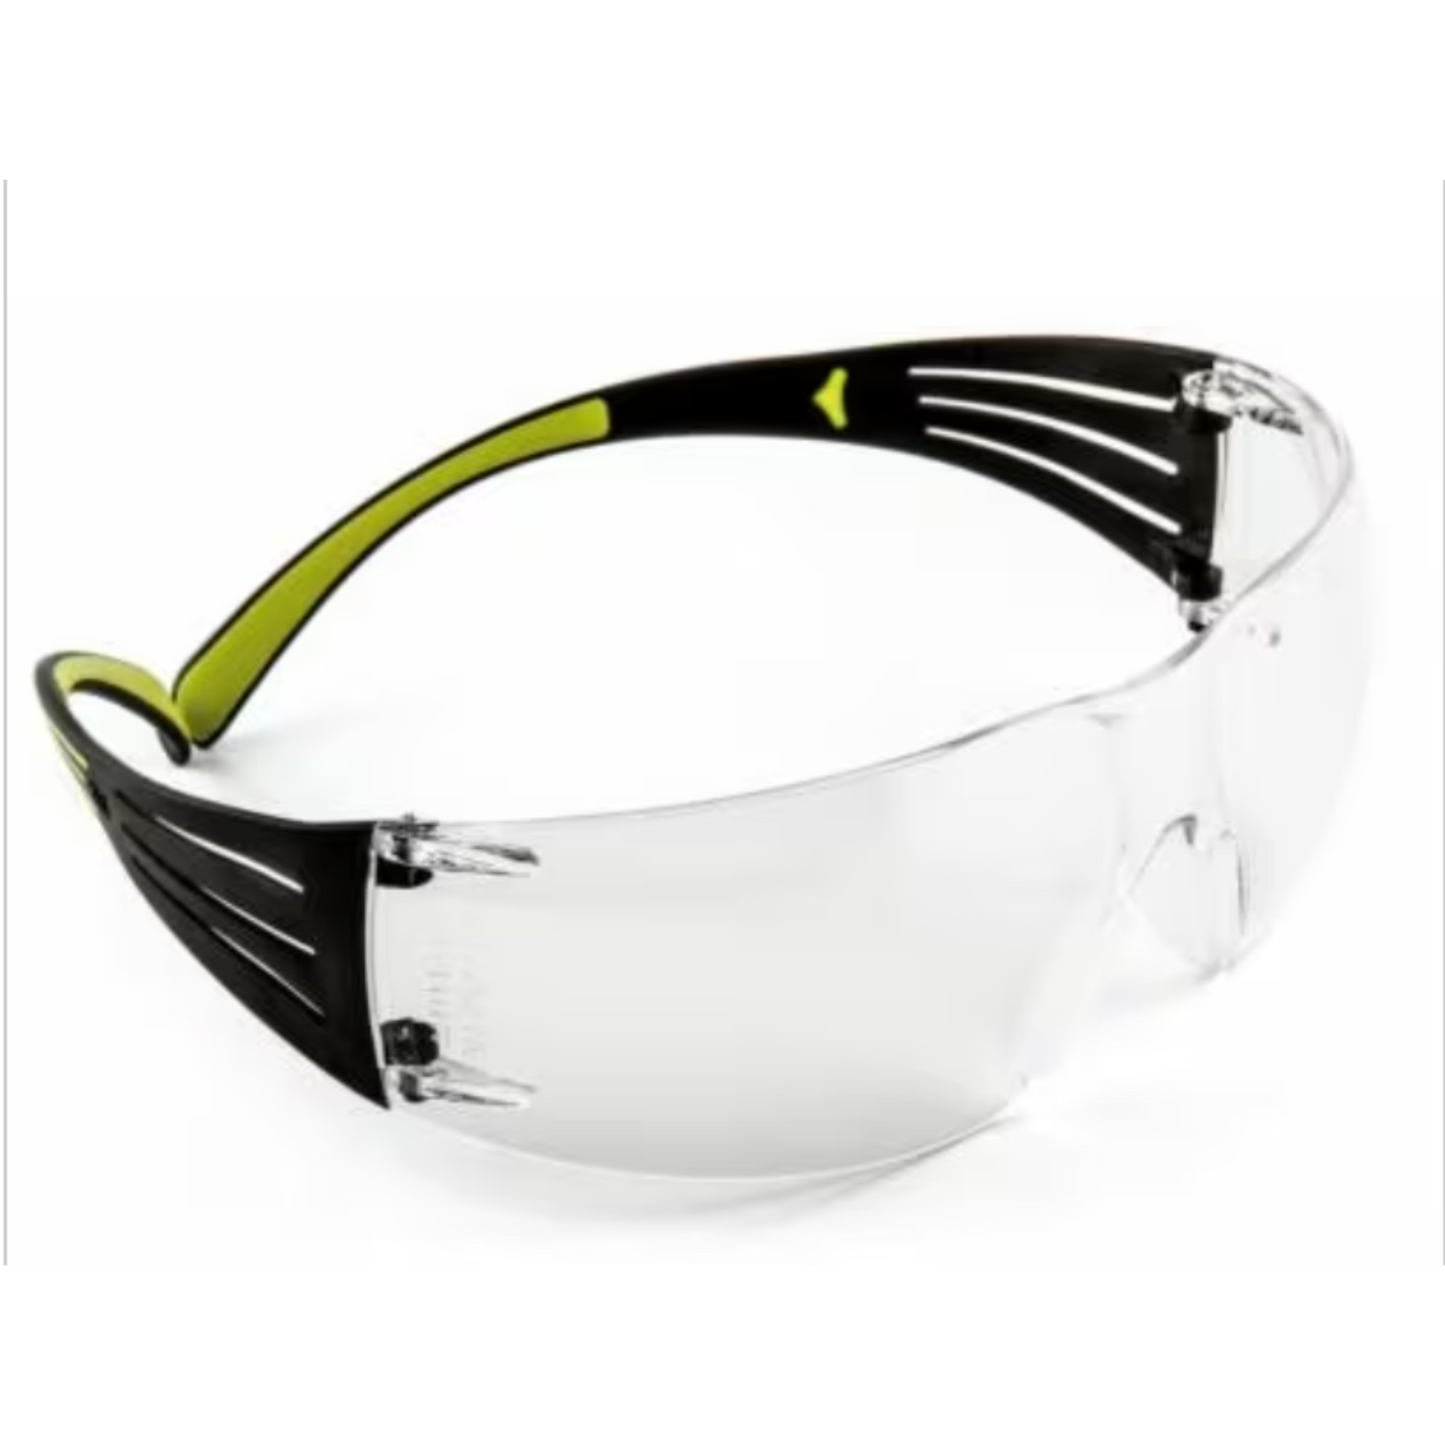 3Mª SecureFitª 400 Series Safety Glasses